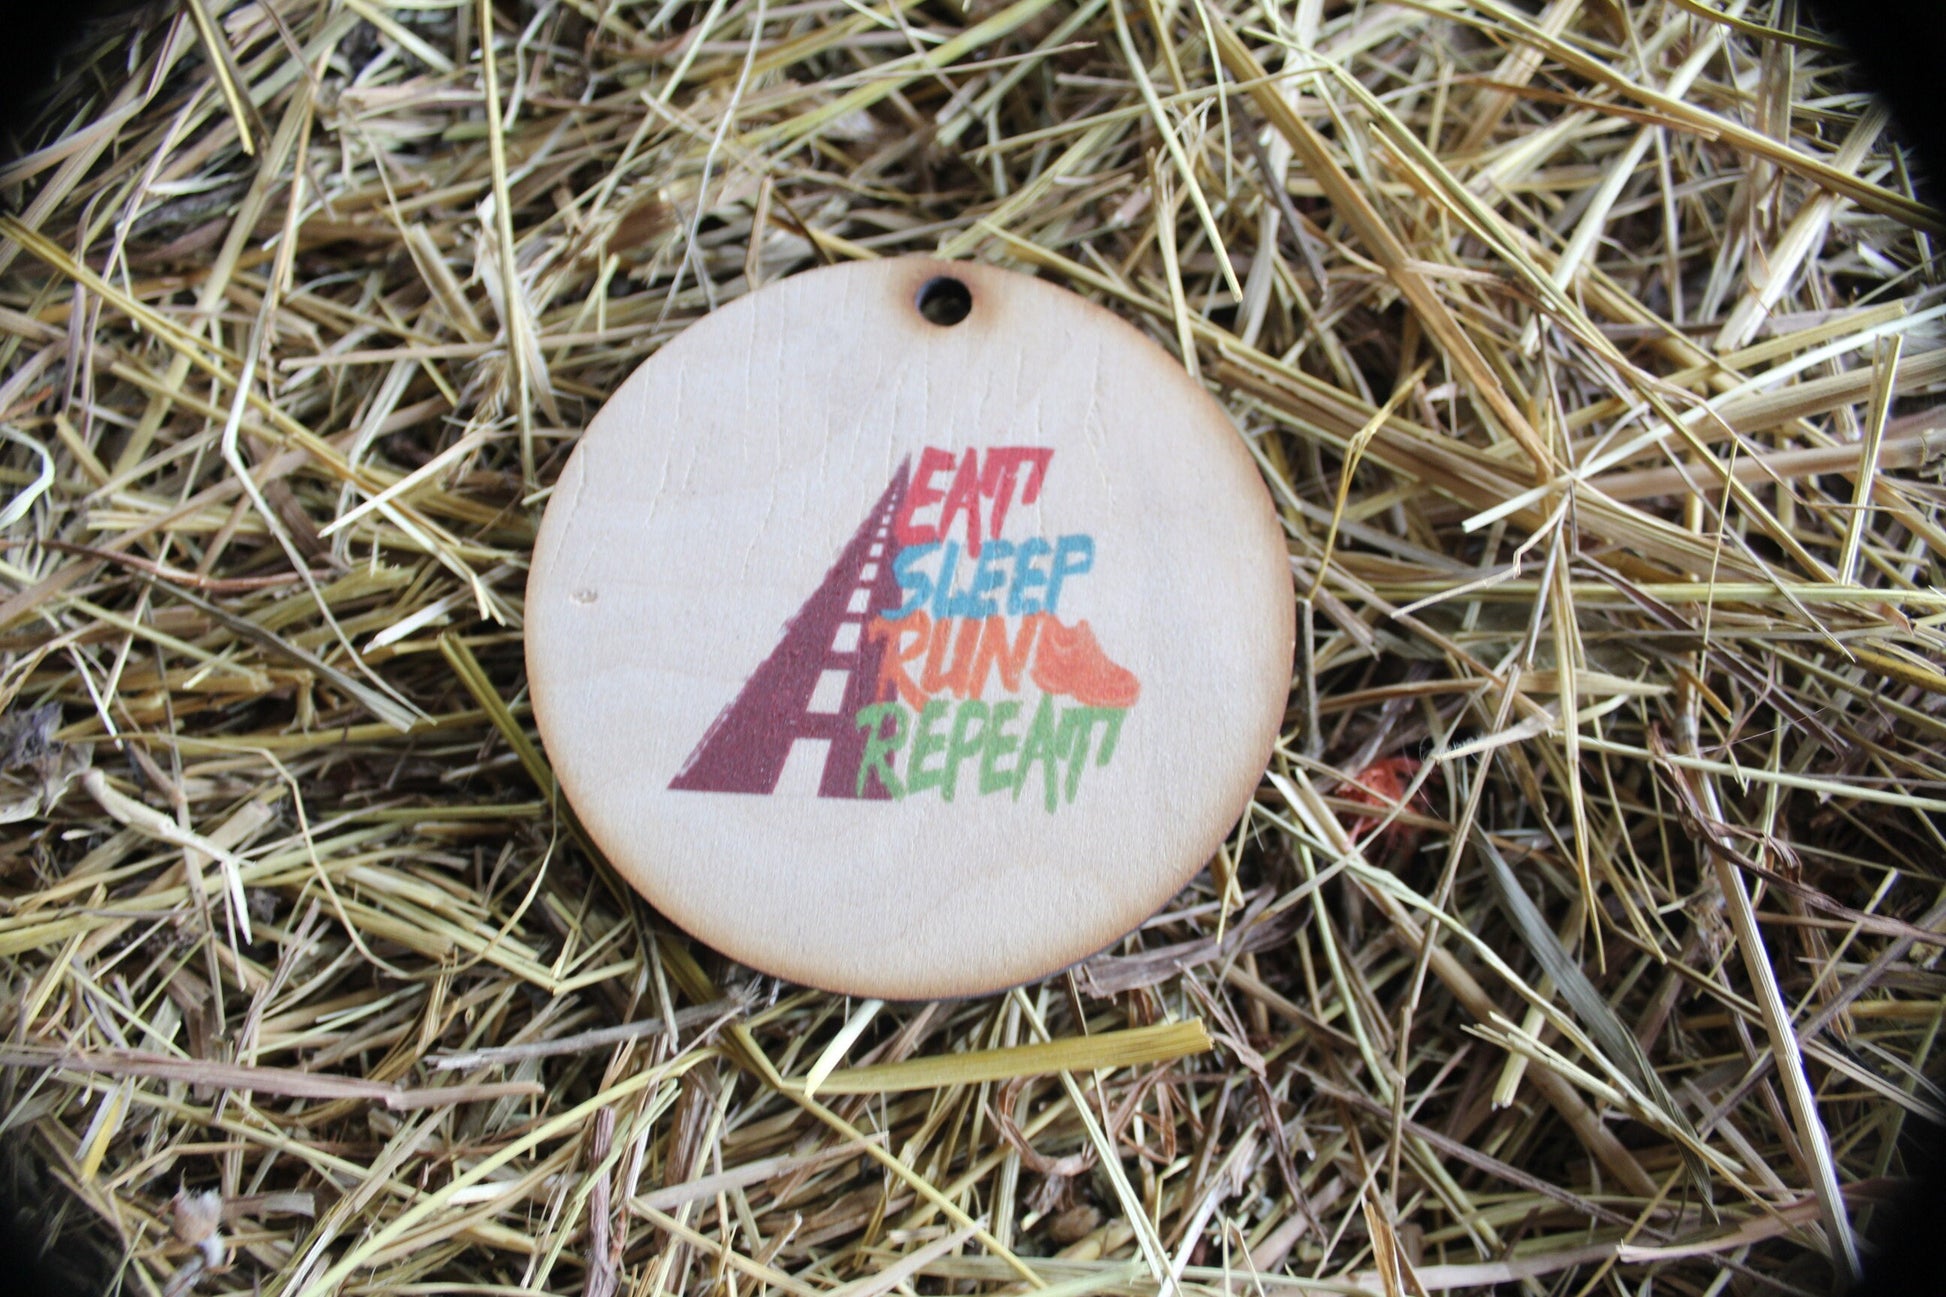 Eat Sleep Run Repeat Running Shoes Track Pavement Race Marathon Runner Keychain Gift tag Christmas Woodslice Decor Surprise Friend Gift